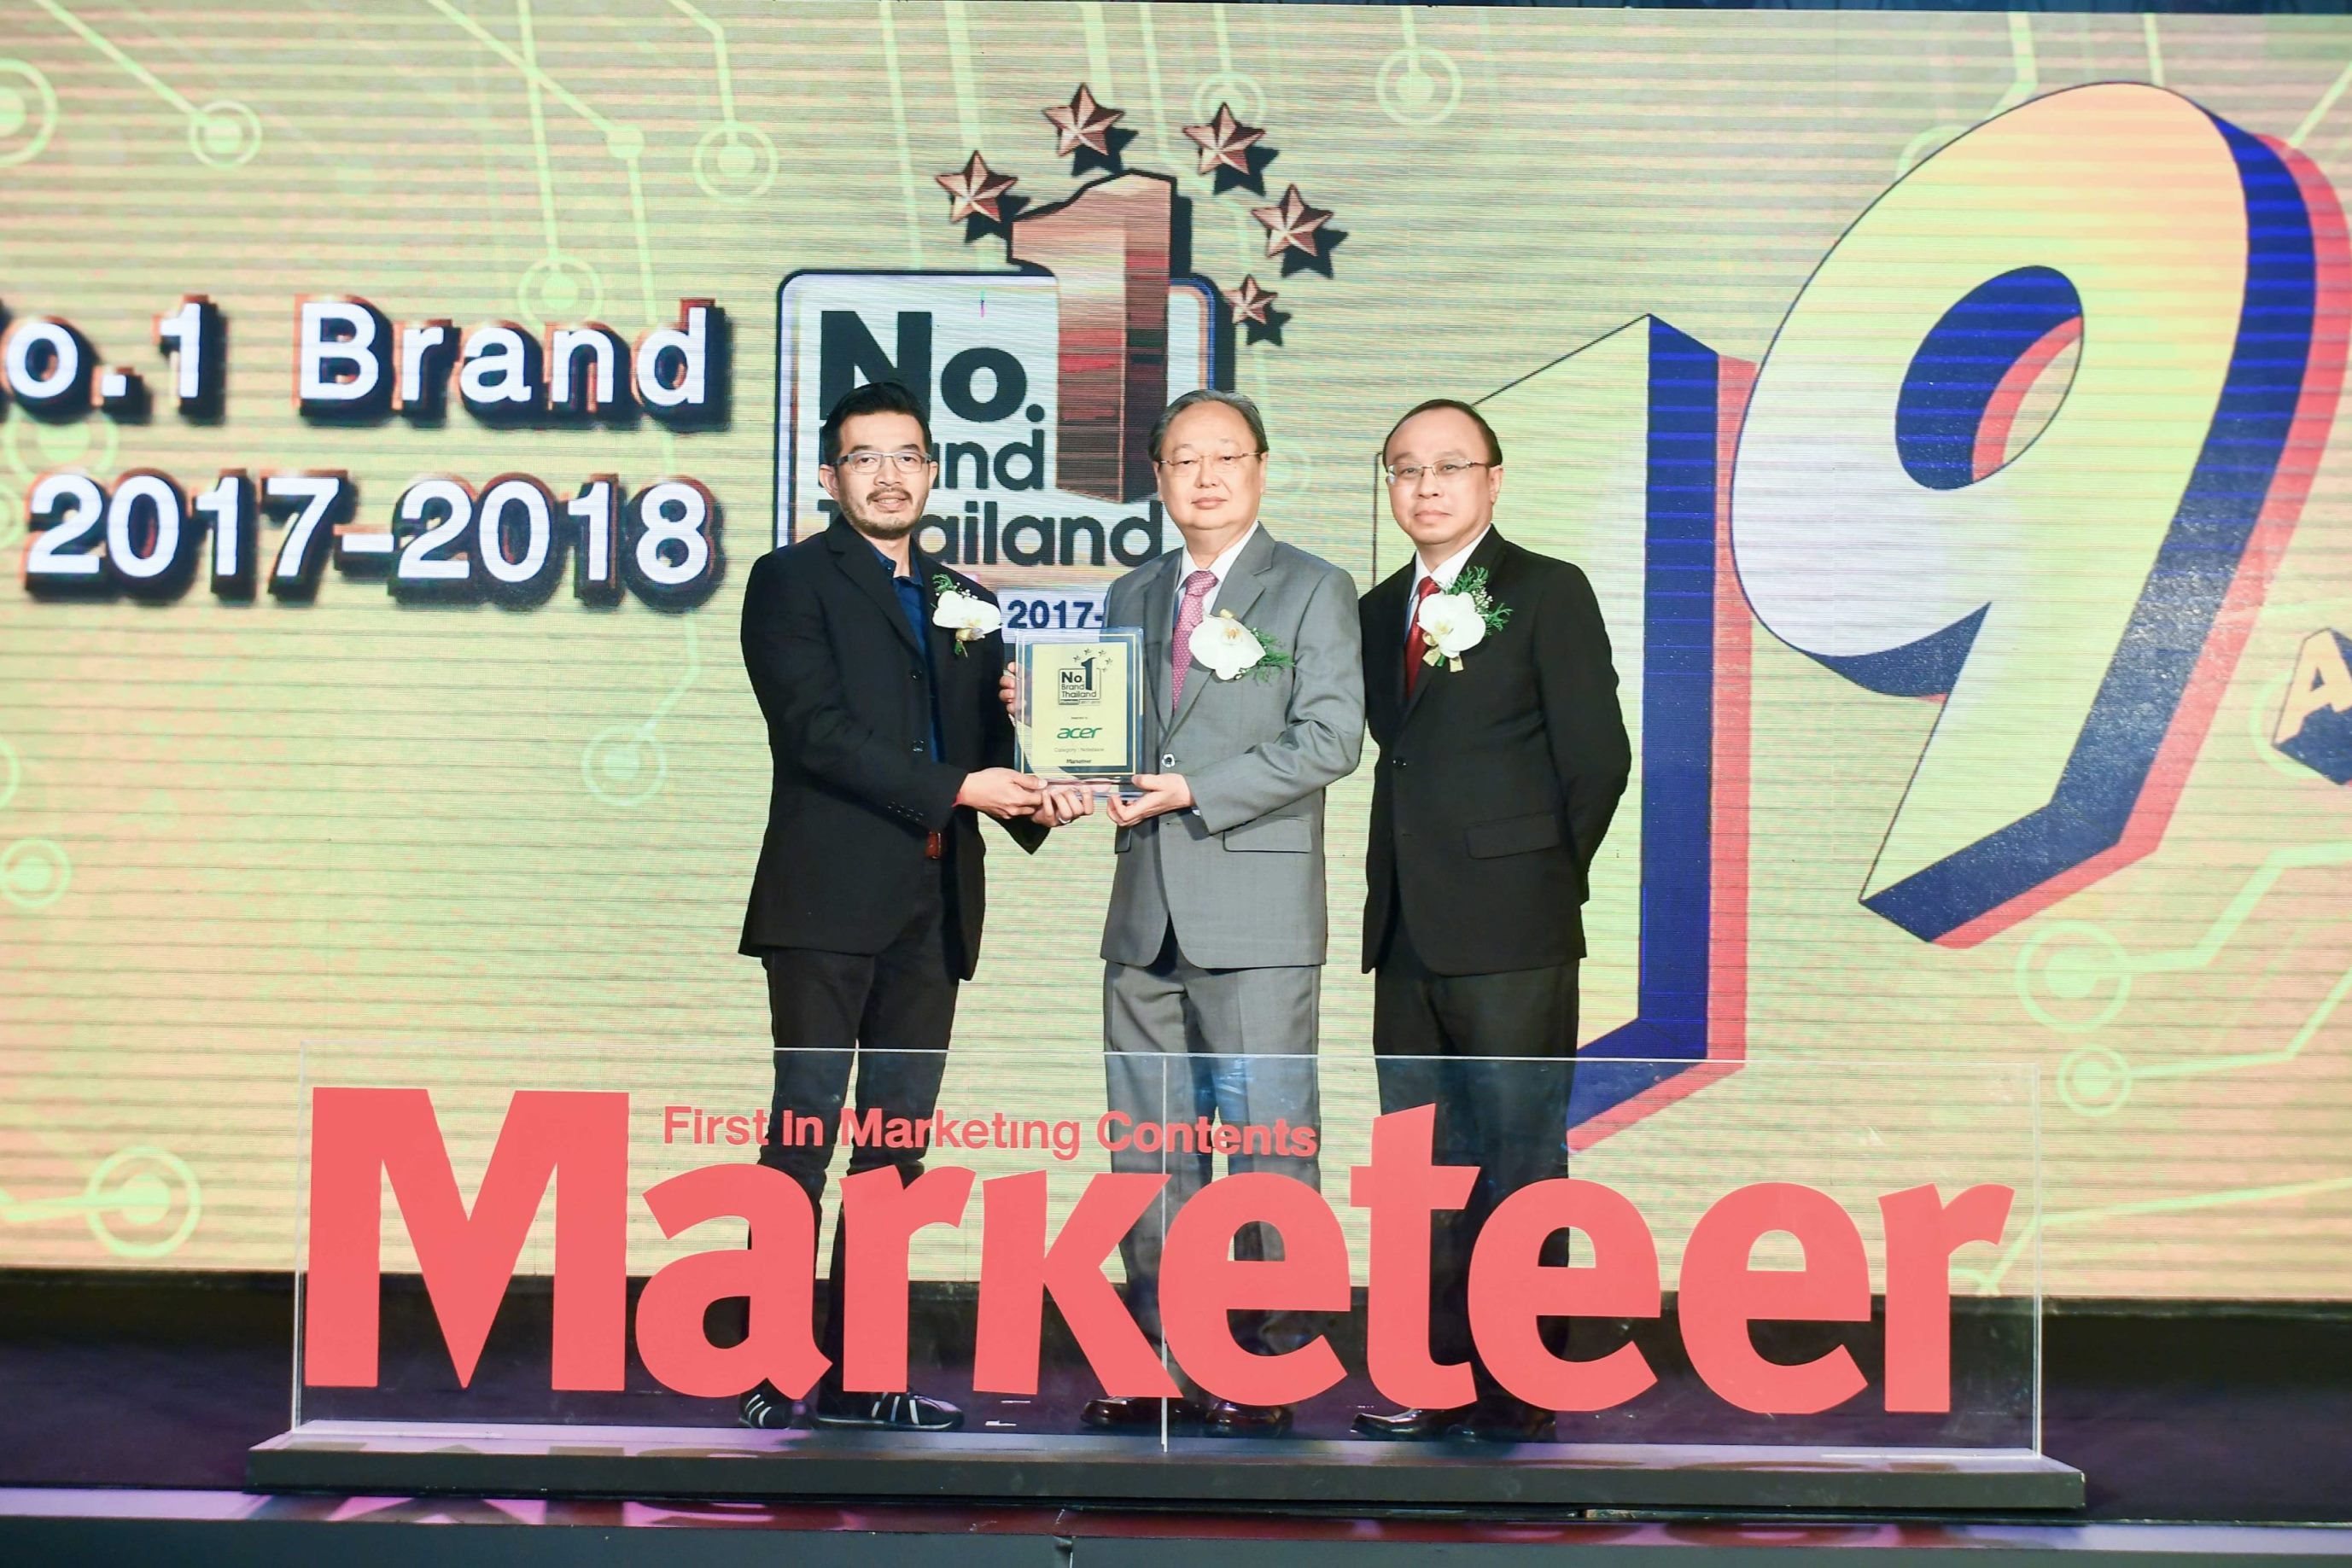 33 resize 1 เอเซอร์คว้ารางวัล “No.1 Brand Thailand 2018” ประเภทโน้ตบุ๊คยอดนิยม ตอกย้ำความเป็นผู้นำต่อเนื่องเป็นปีที่ 7